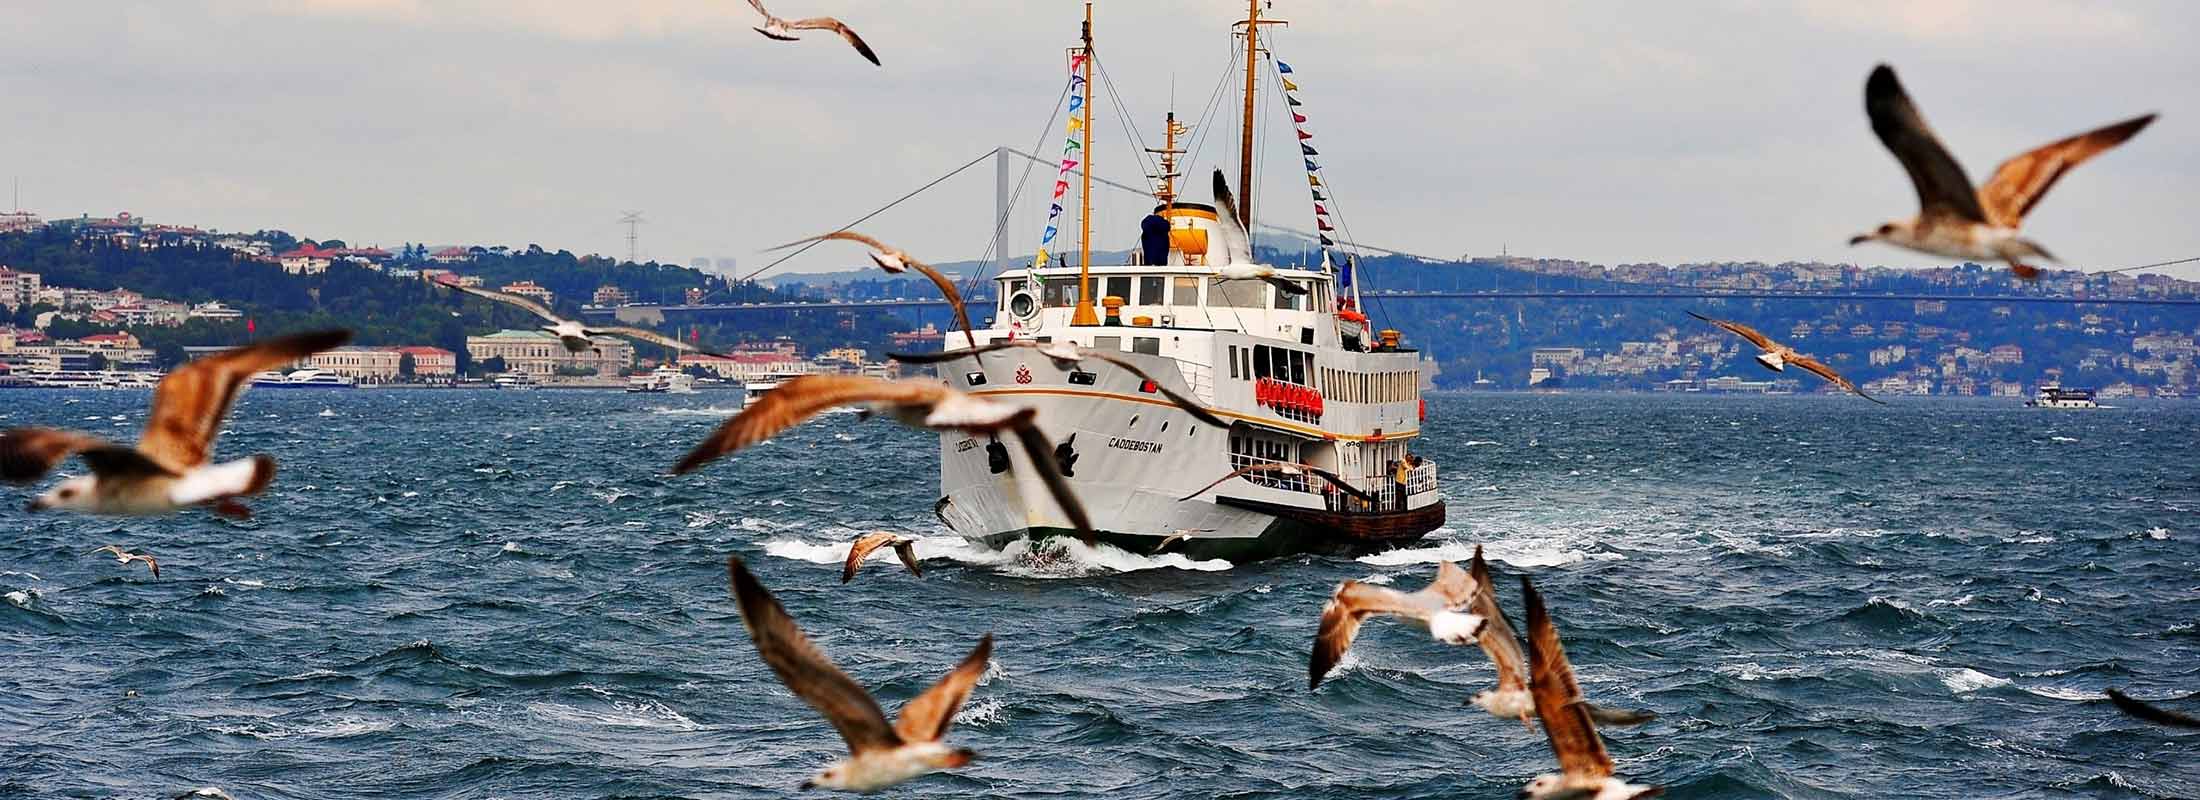 Bosphorus 10 DAYS TURKEY PACKAGE TOUR ISTANBUL CAPPADOCIA